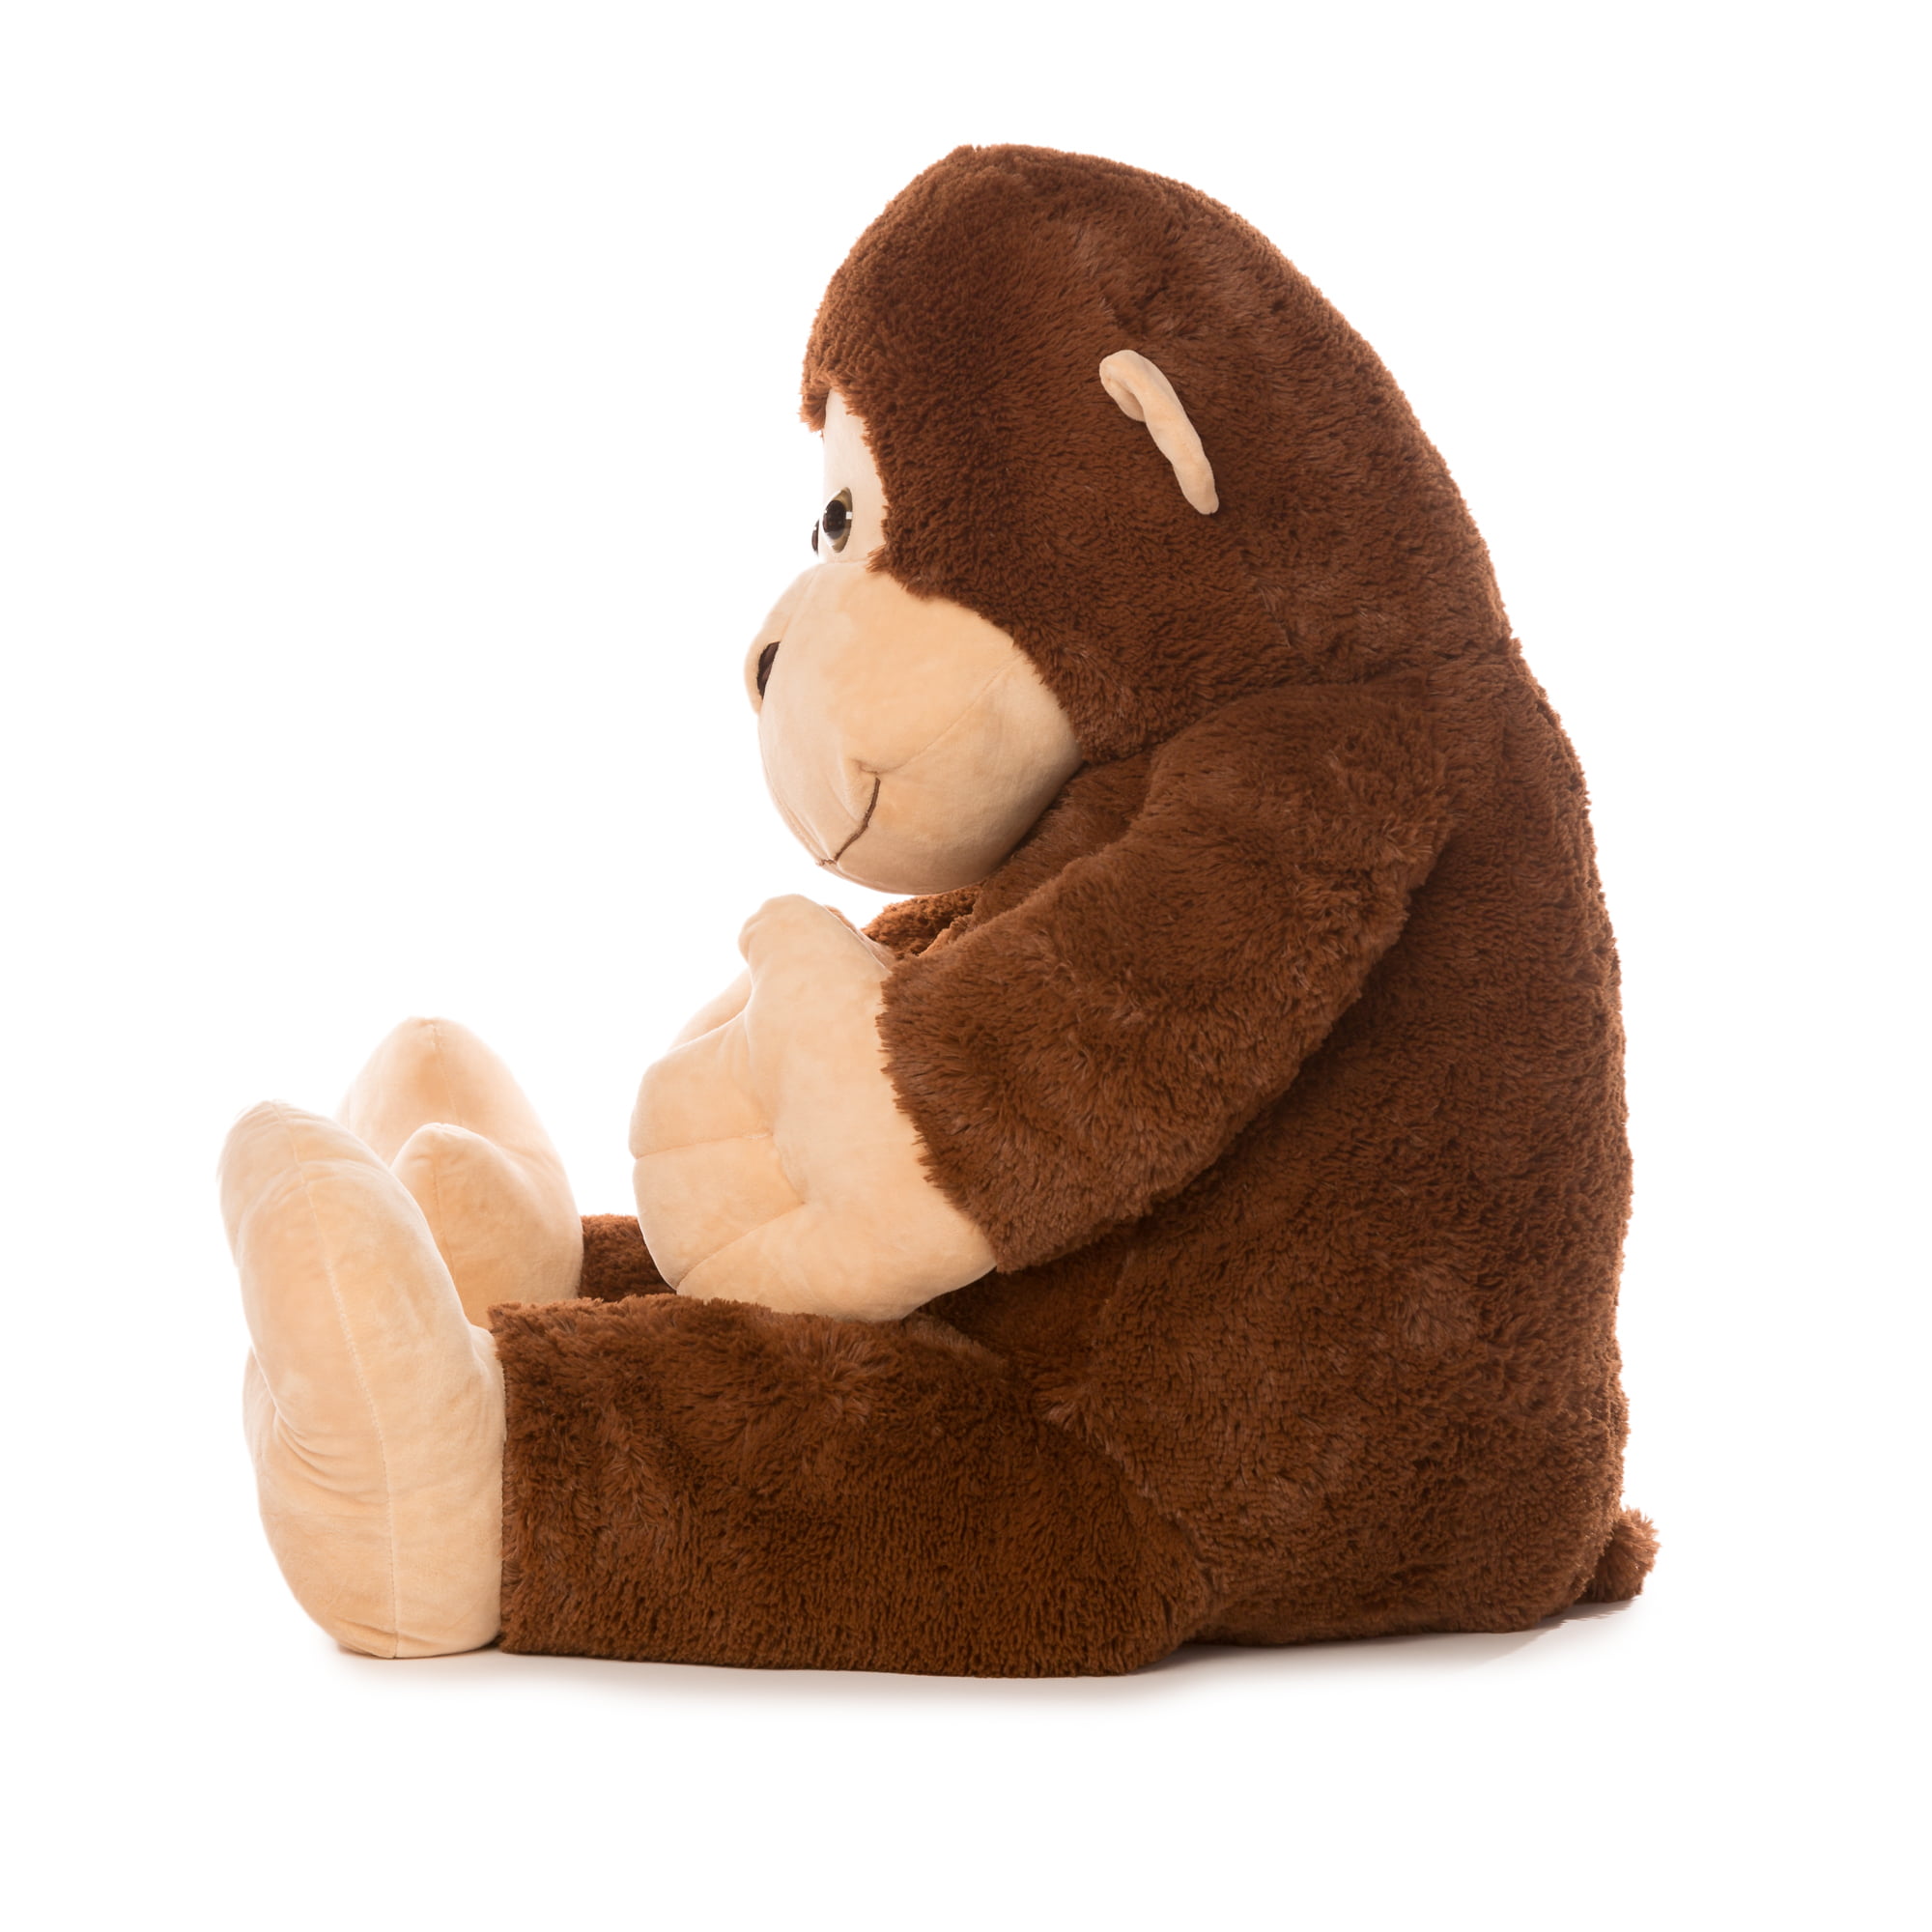 Details about   Jumbo Plush Animal Monkey Doll Giant Stuffed Soft Cartoon Monkey Kids Gift 2019 